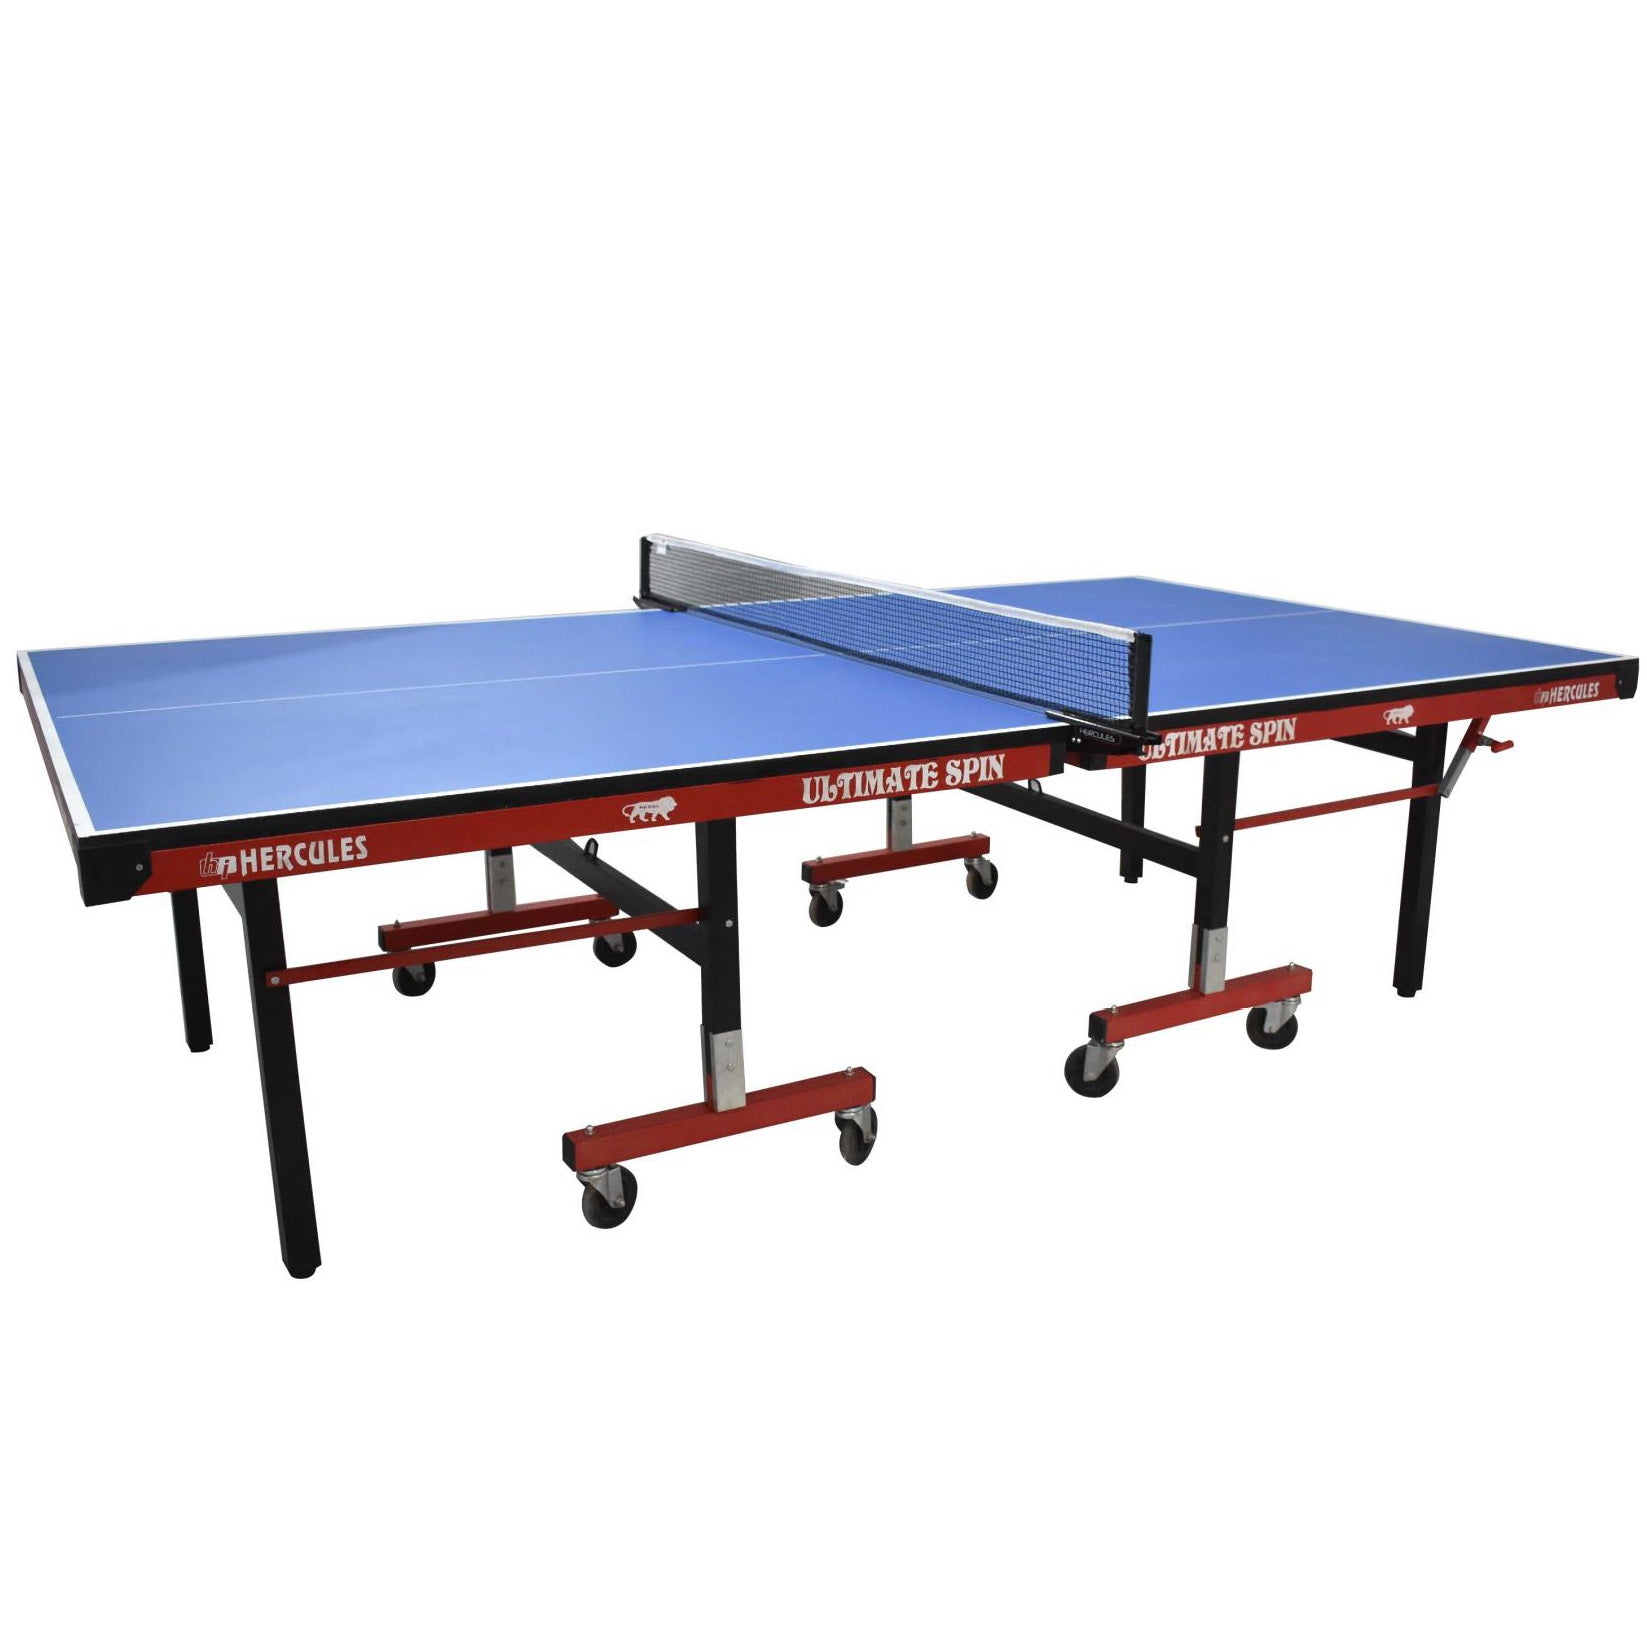 Buy Hercules Ultimate Spin Table Tennis Table